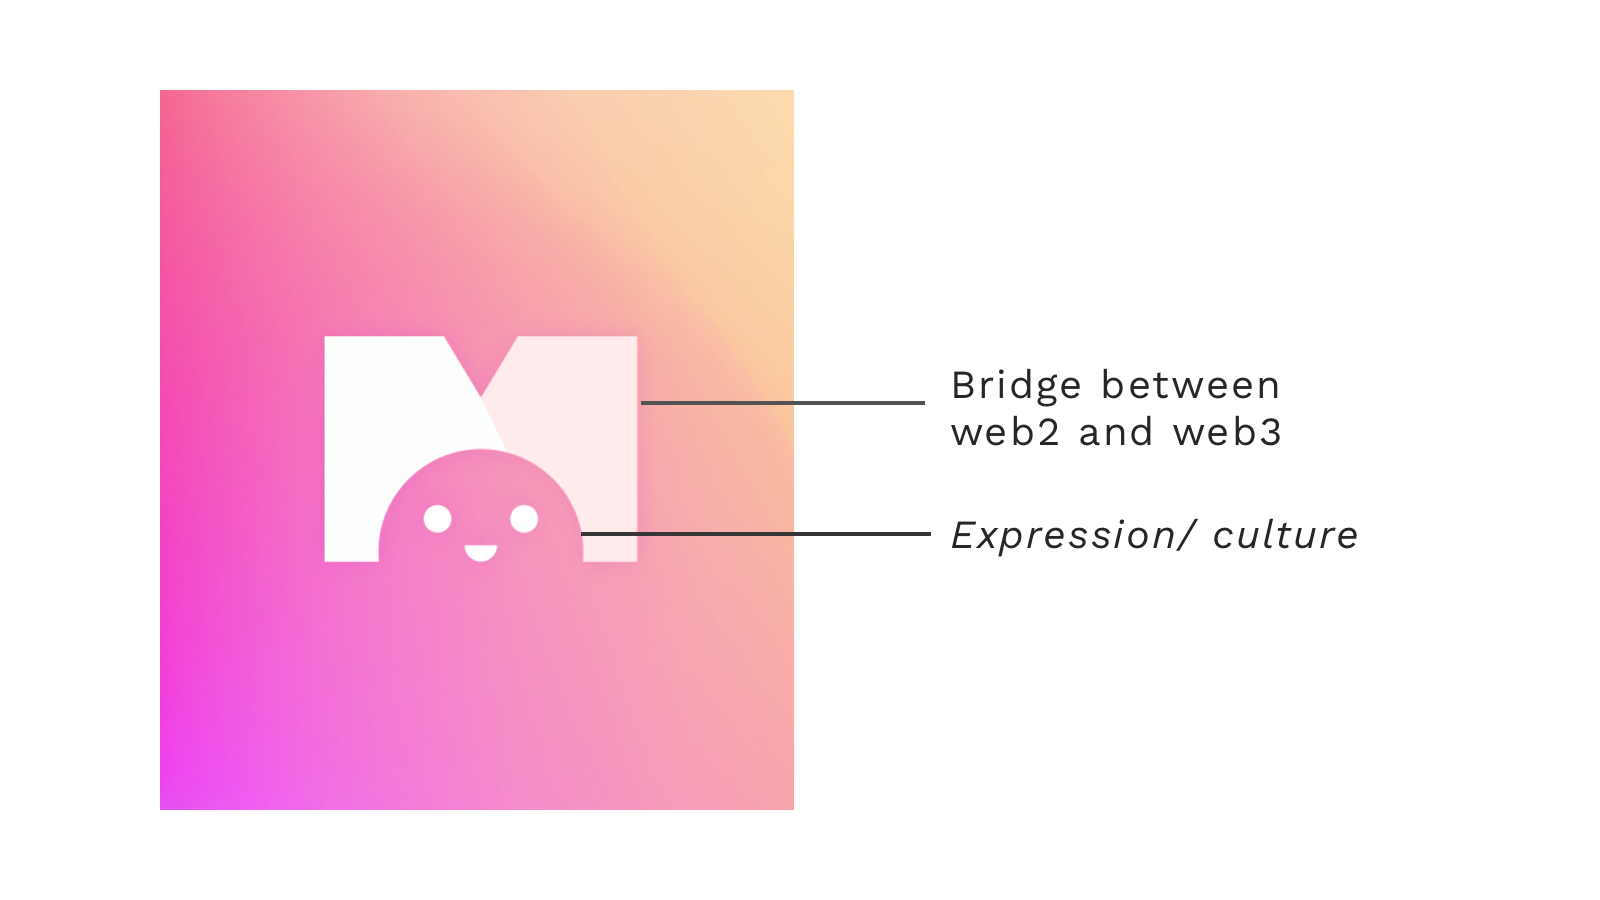 3moji logo denotes an expression engine that bridges web2 and web3